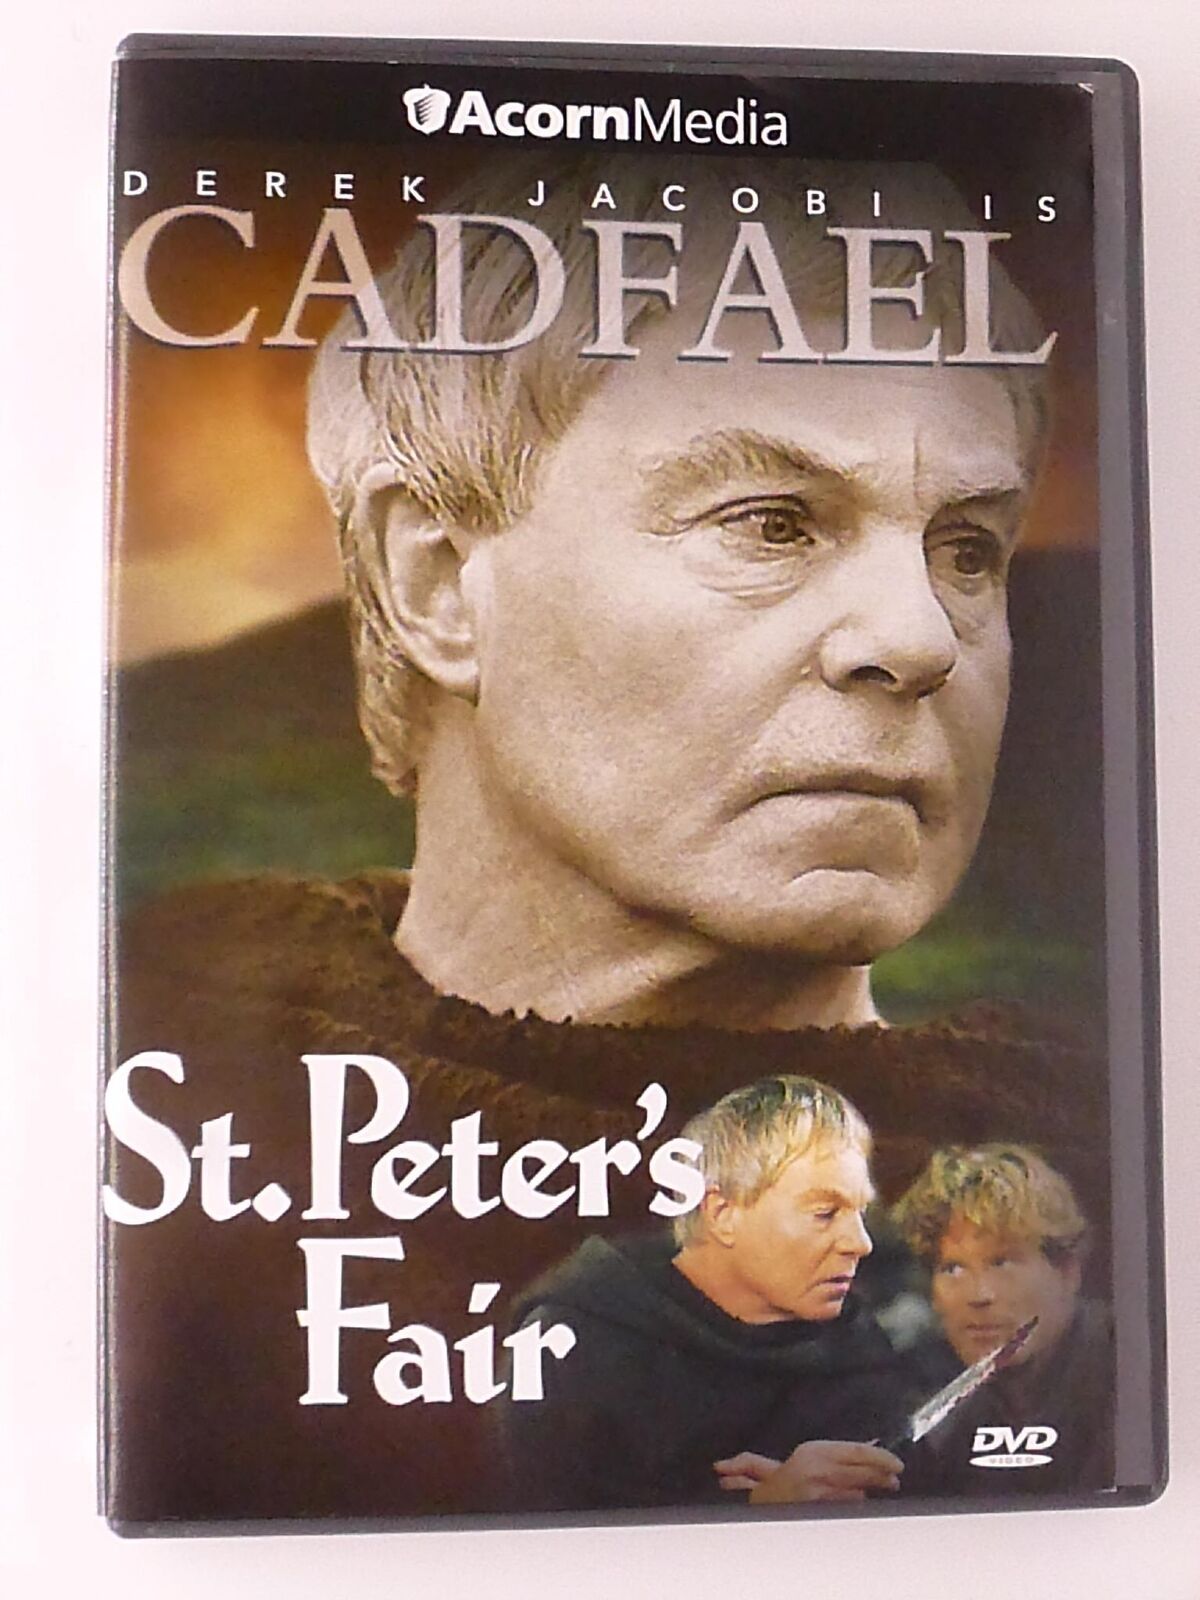 Cadfael - St. Peters Fair (DVD, 1997) - I0227